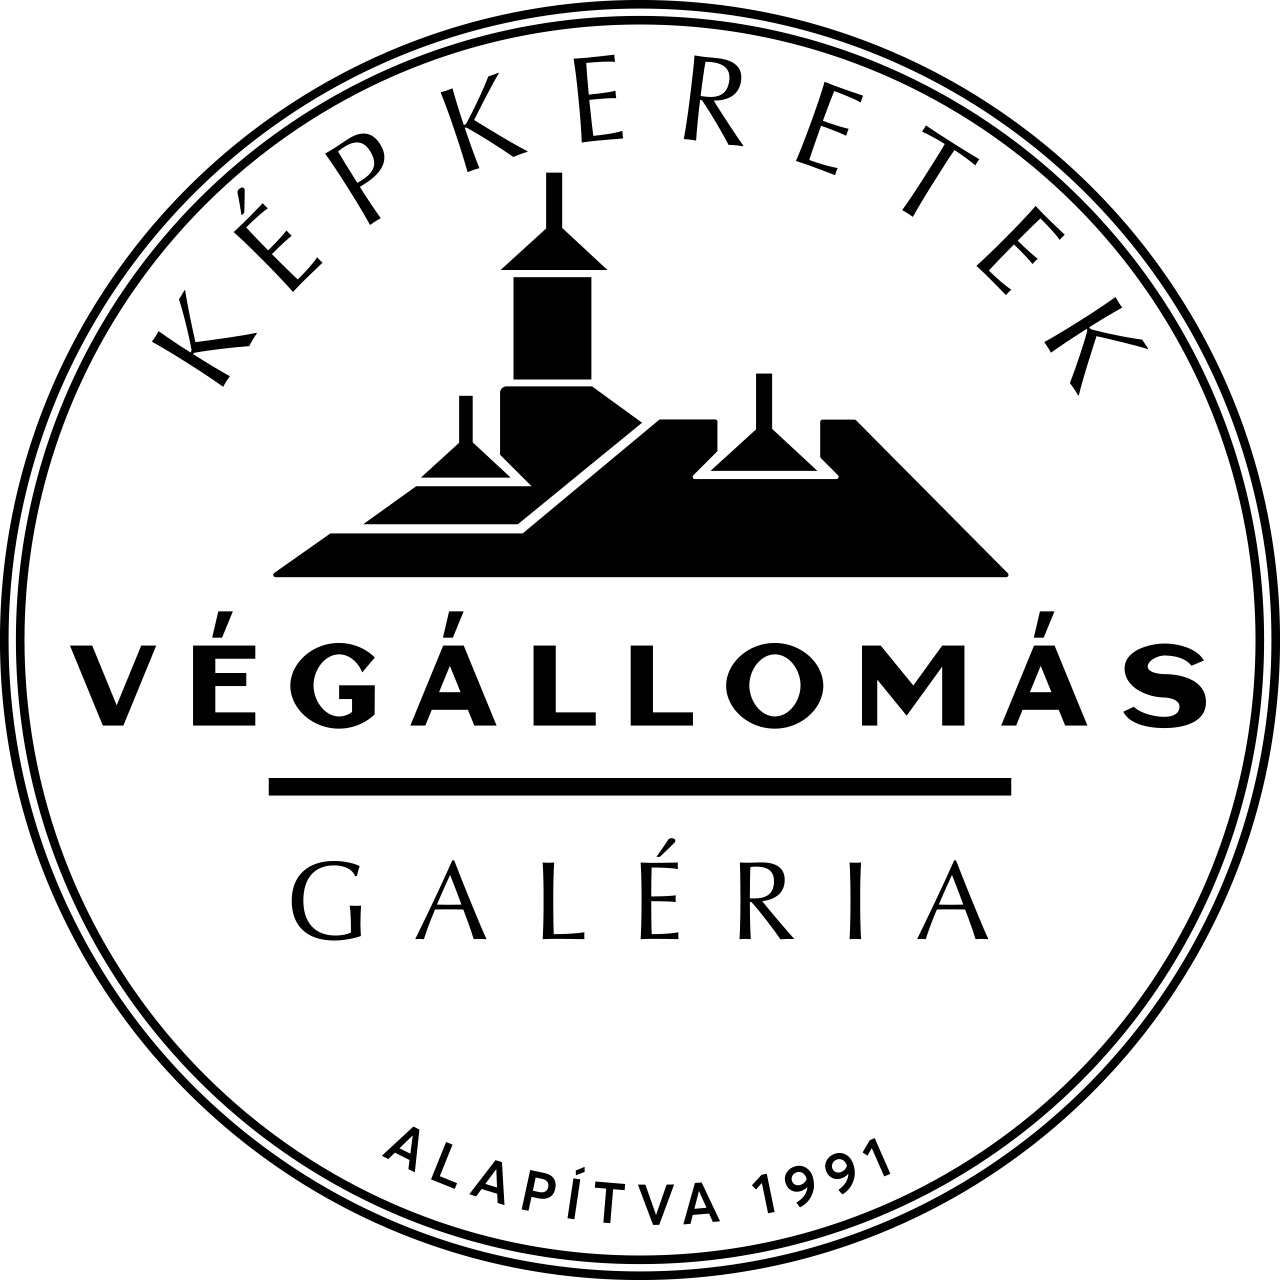 Végállomás Galéria transzparens logó